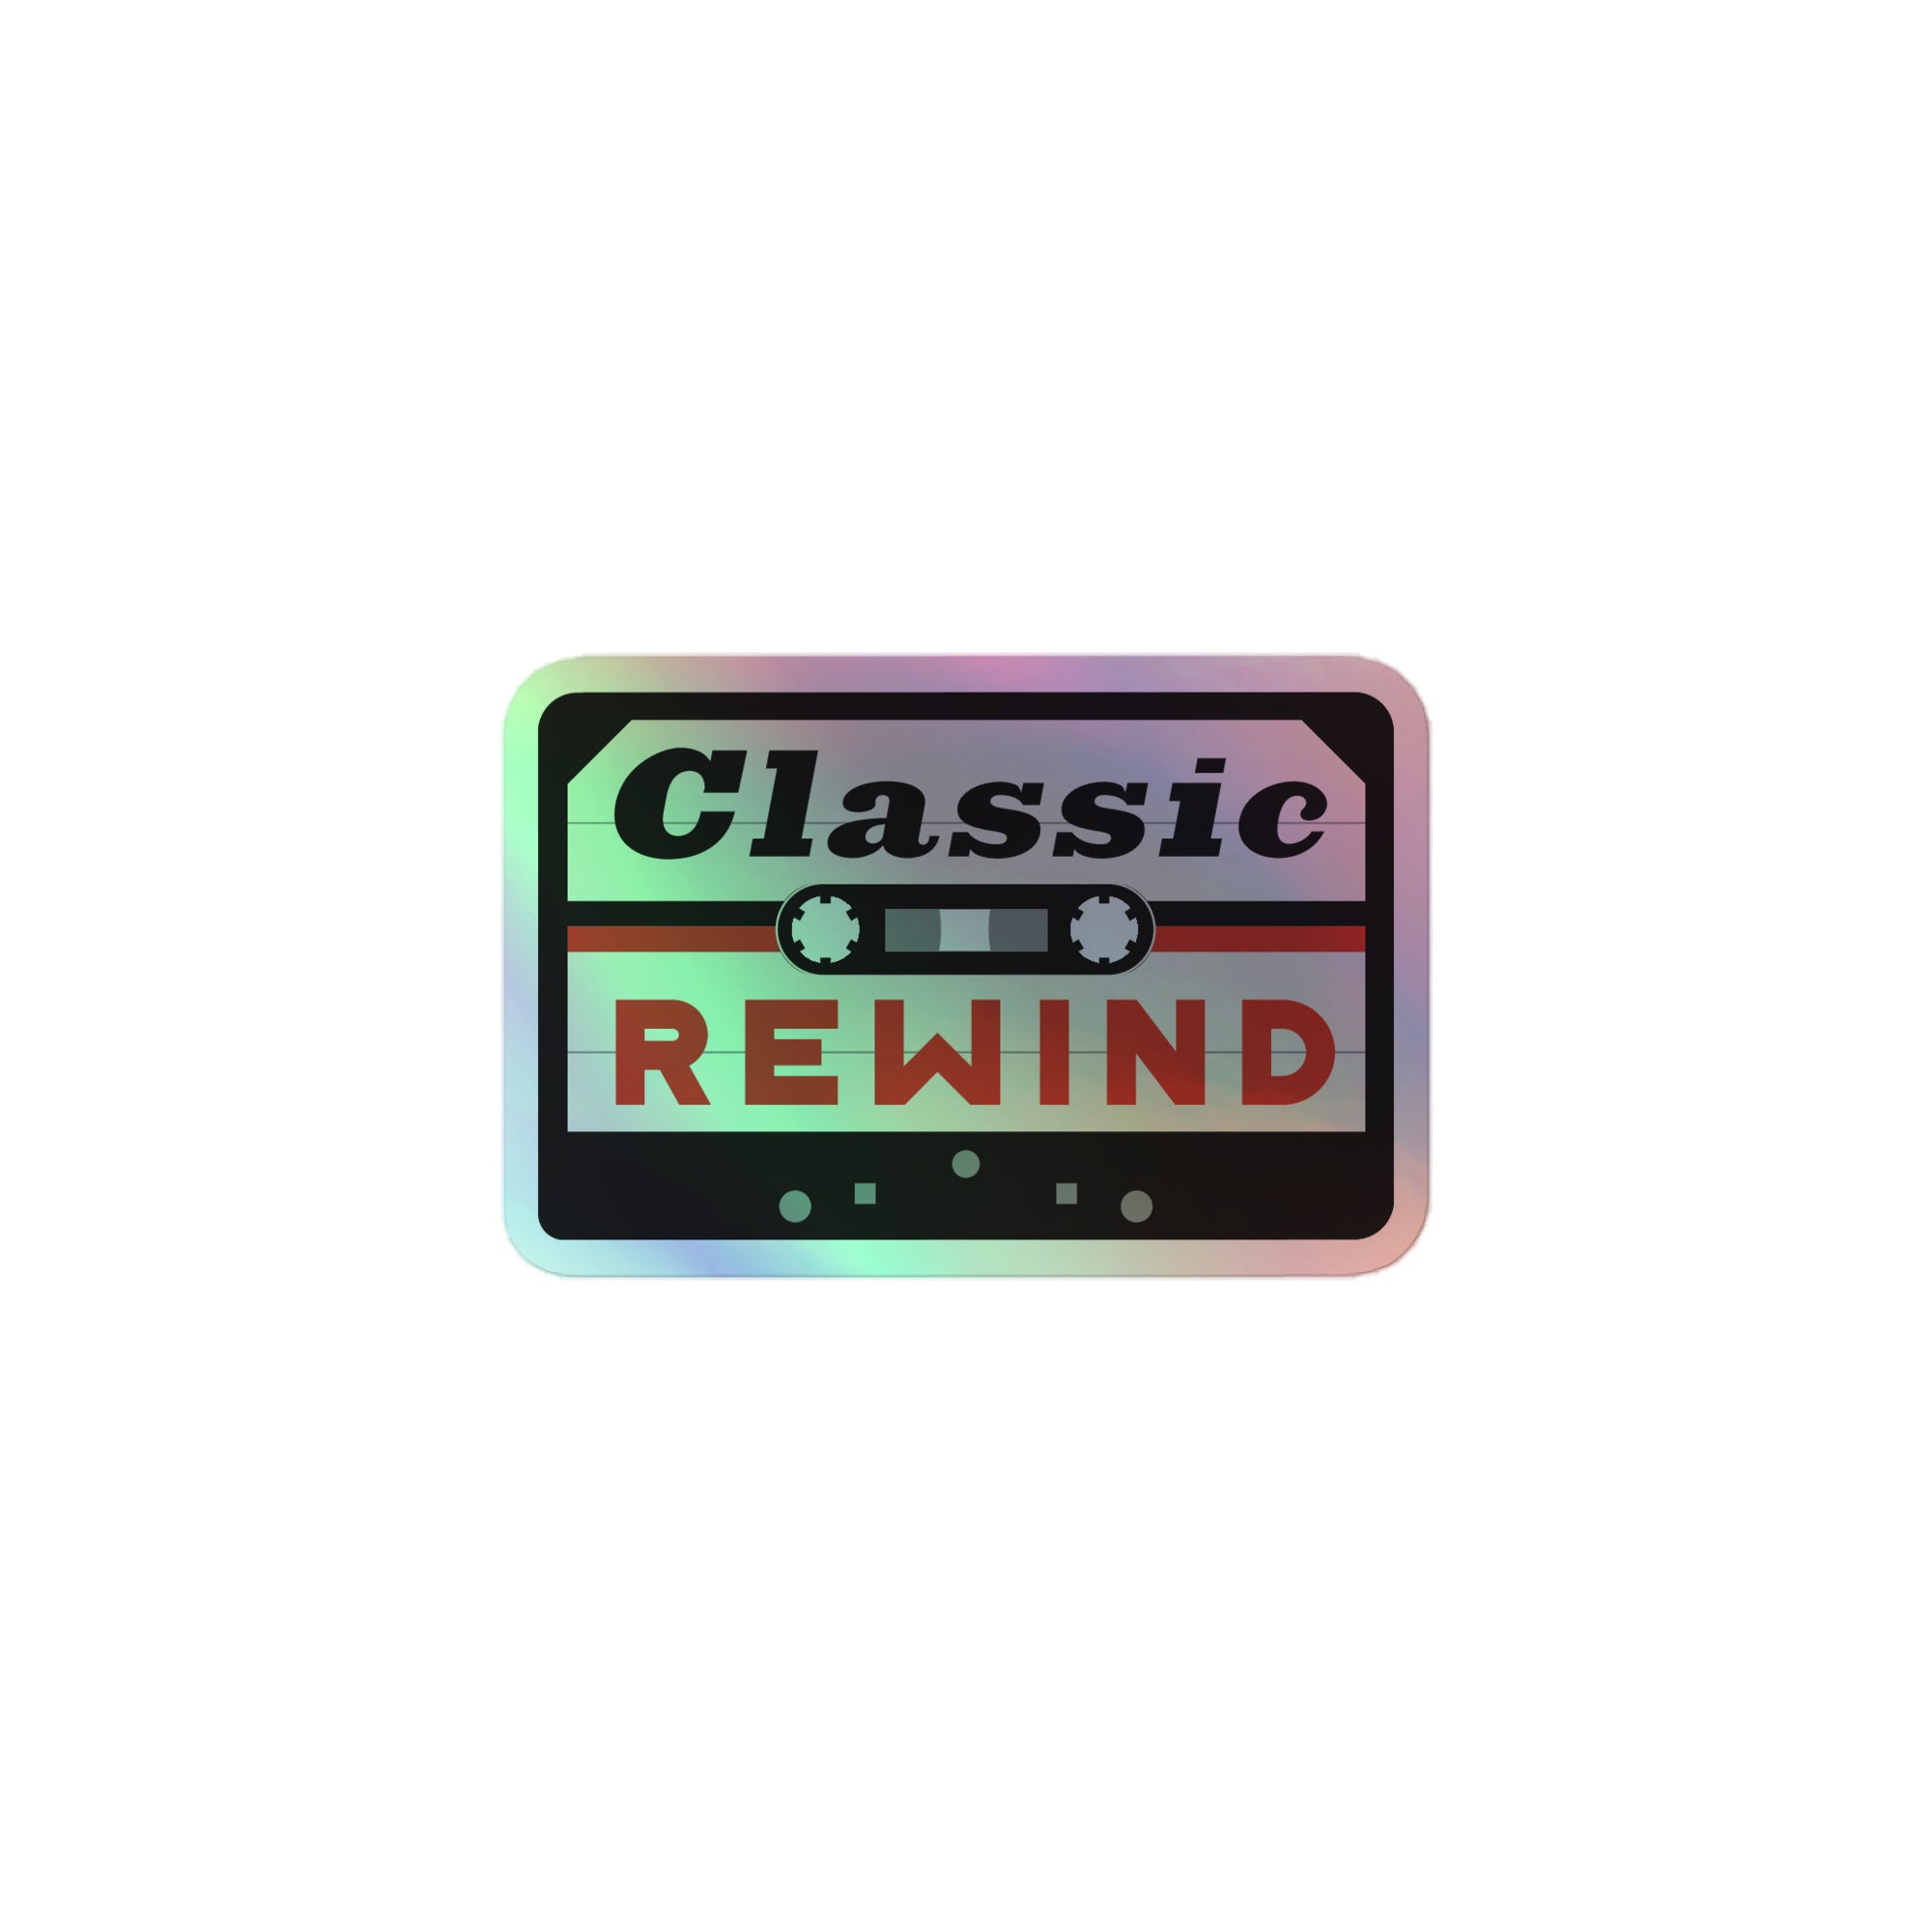 Classic Rewind: Holographic Sticker